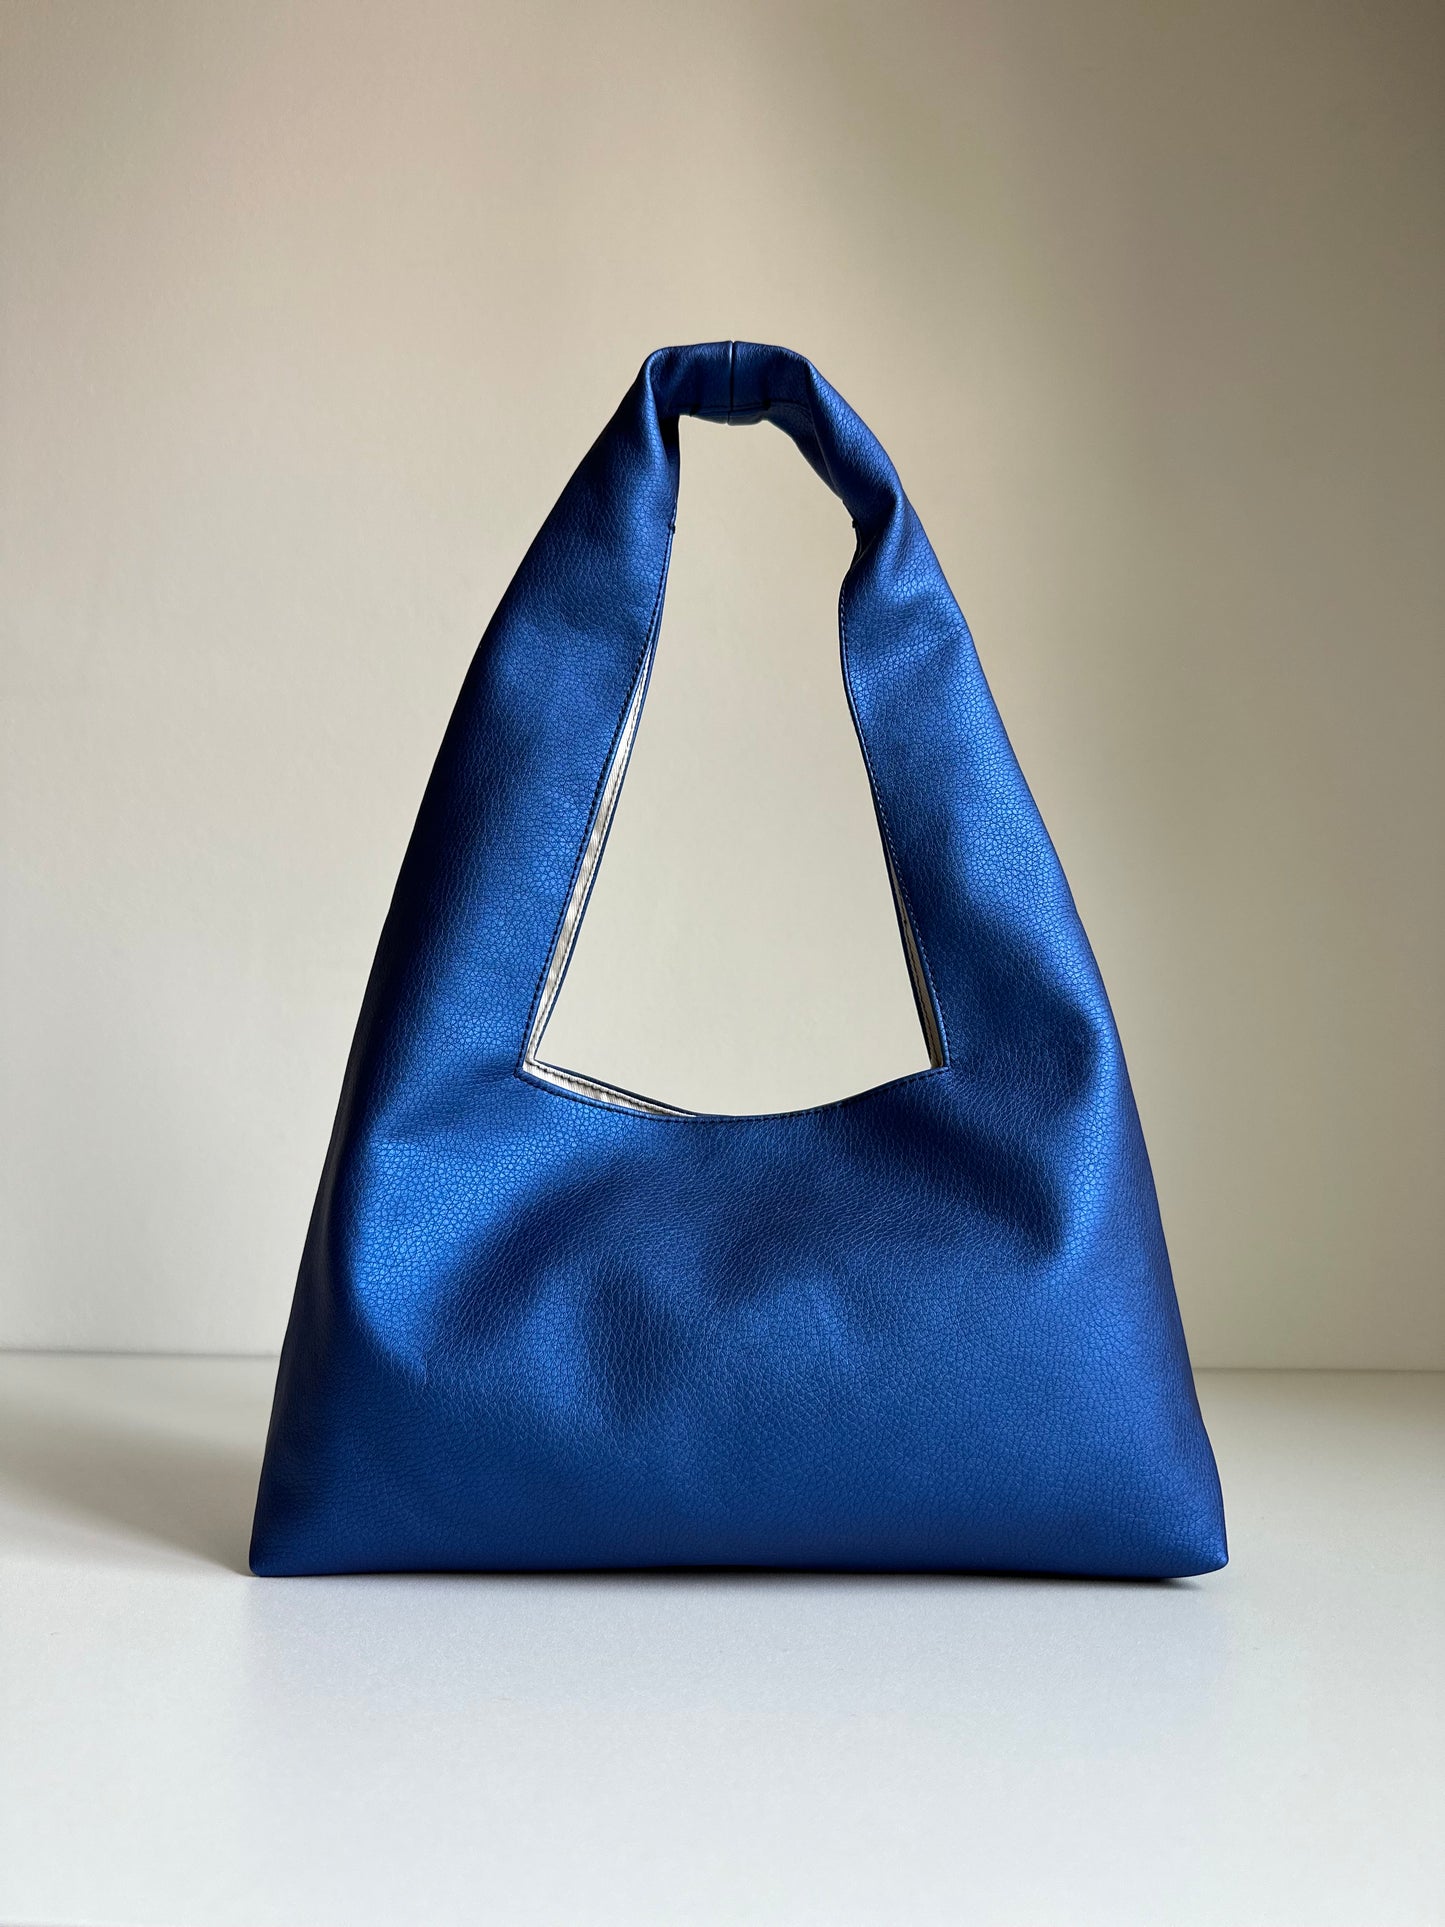 Marlisa Strauss Triangle Bag Royal